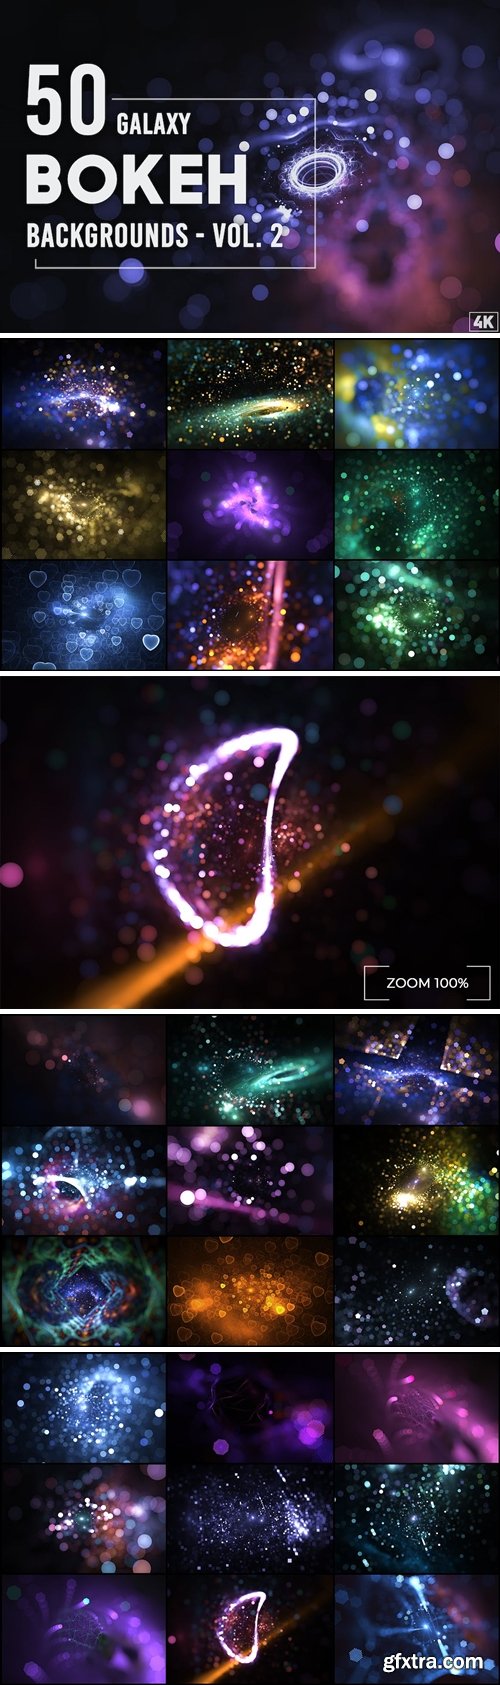 50 Galaxy Bokeh Backgrounds - Vol. 2 KWN9MHP